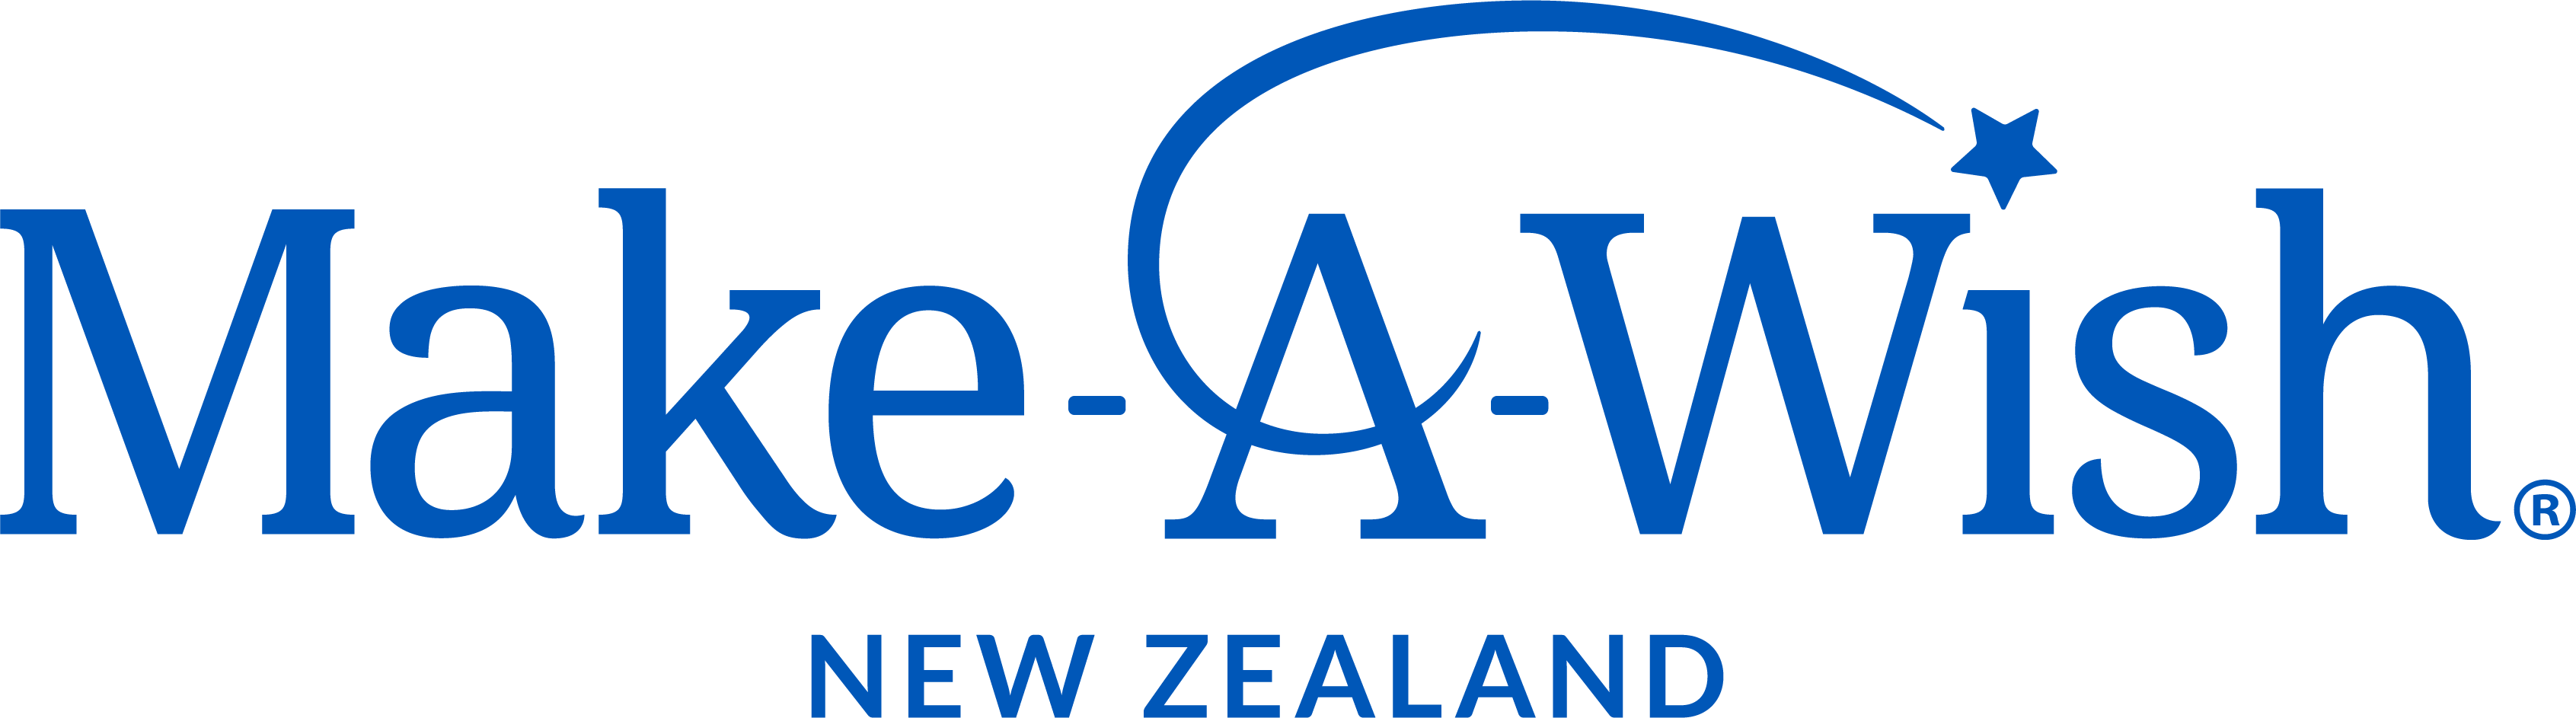 Make-A-Wish New Zealand